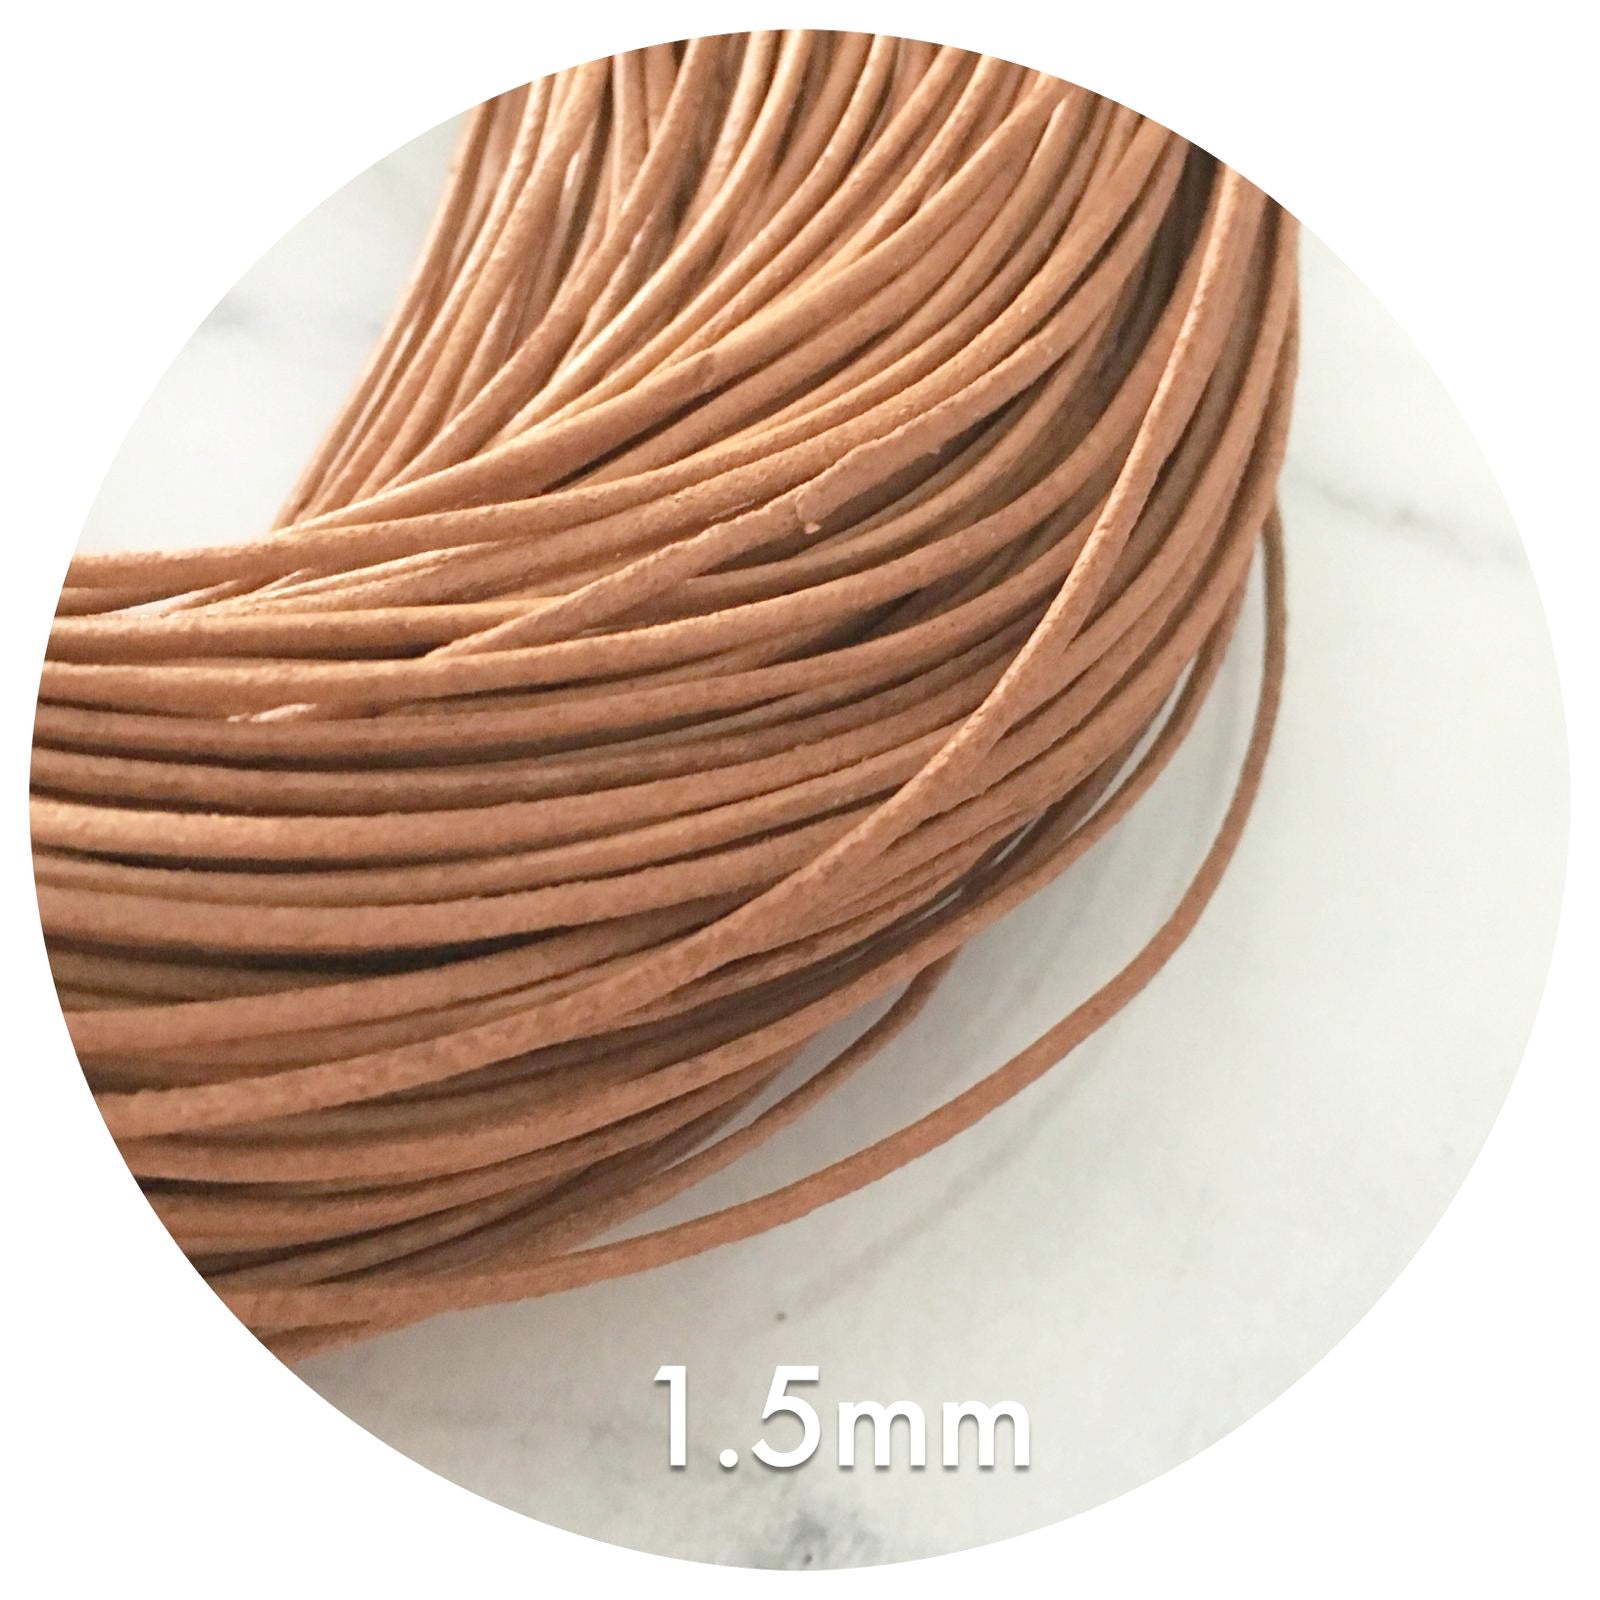 1.5mm Genuine Leather Cord - Natural Tan - 10 metres